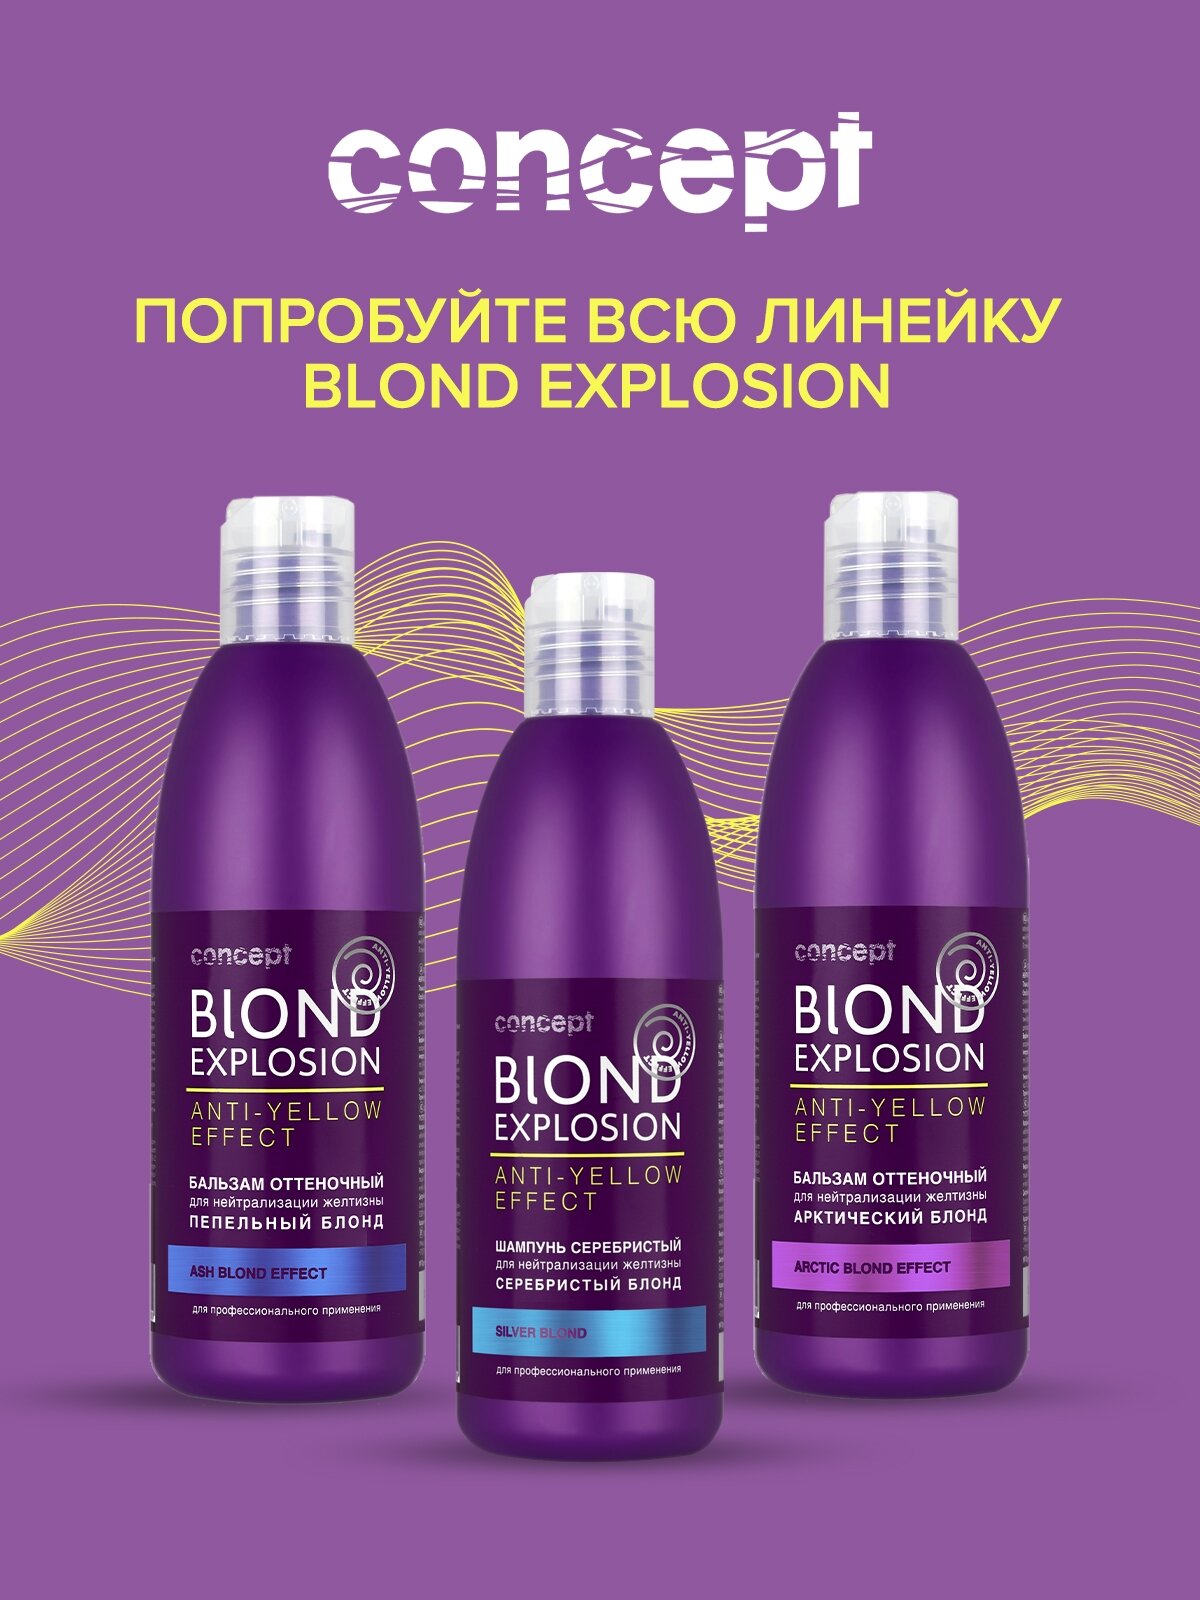 Concept Anti-Yellow Silver Blond Shampoo - Концепт Анти Еллоу Сильвер Блонд Серебристый Шампунь для светлых оттенков, 300 мл -